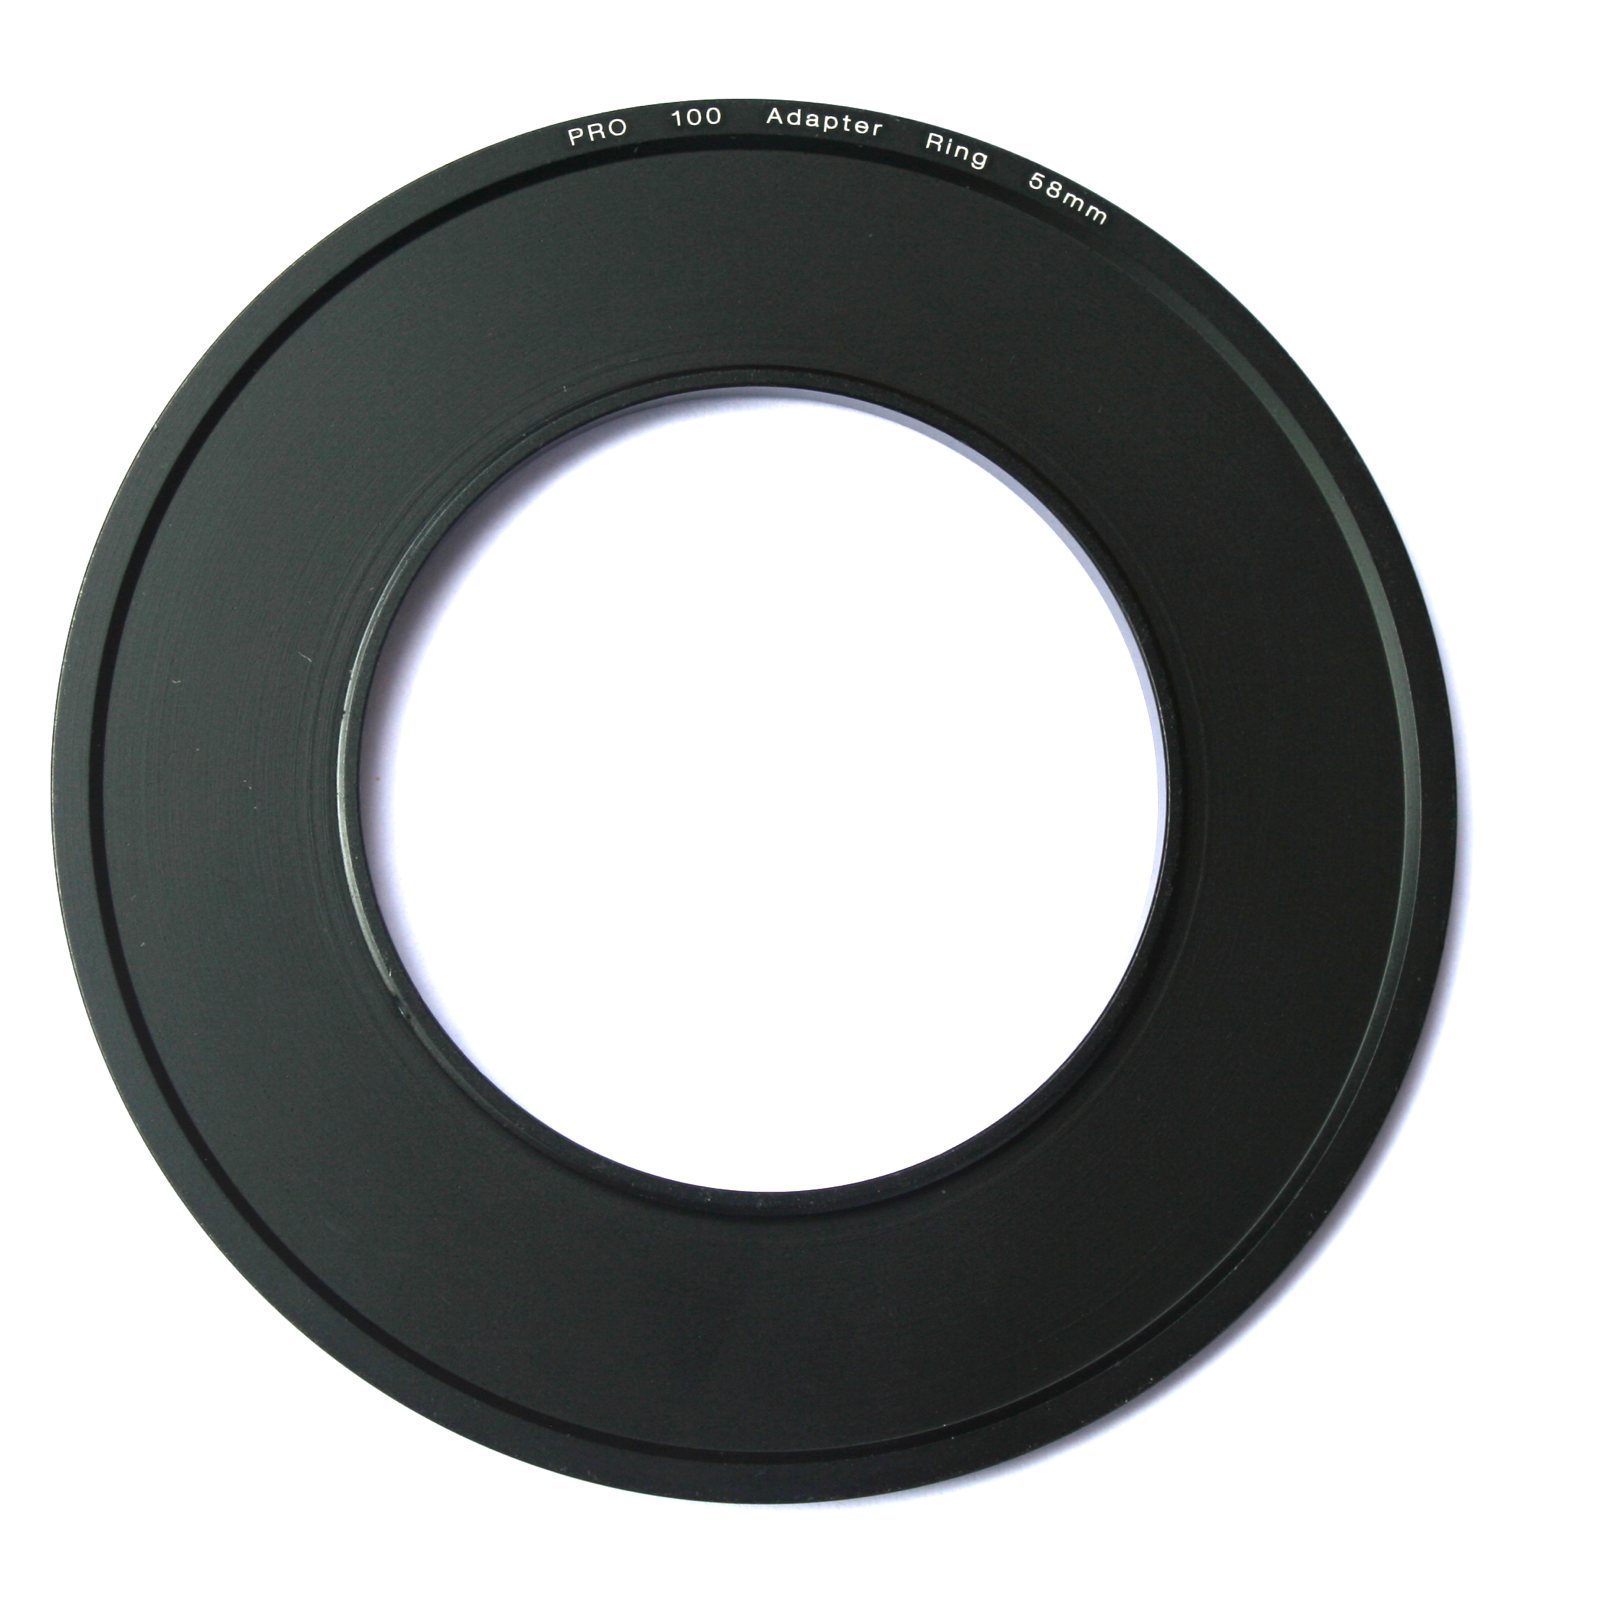 Tiffen PRO100 58mm adapter ring